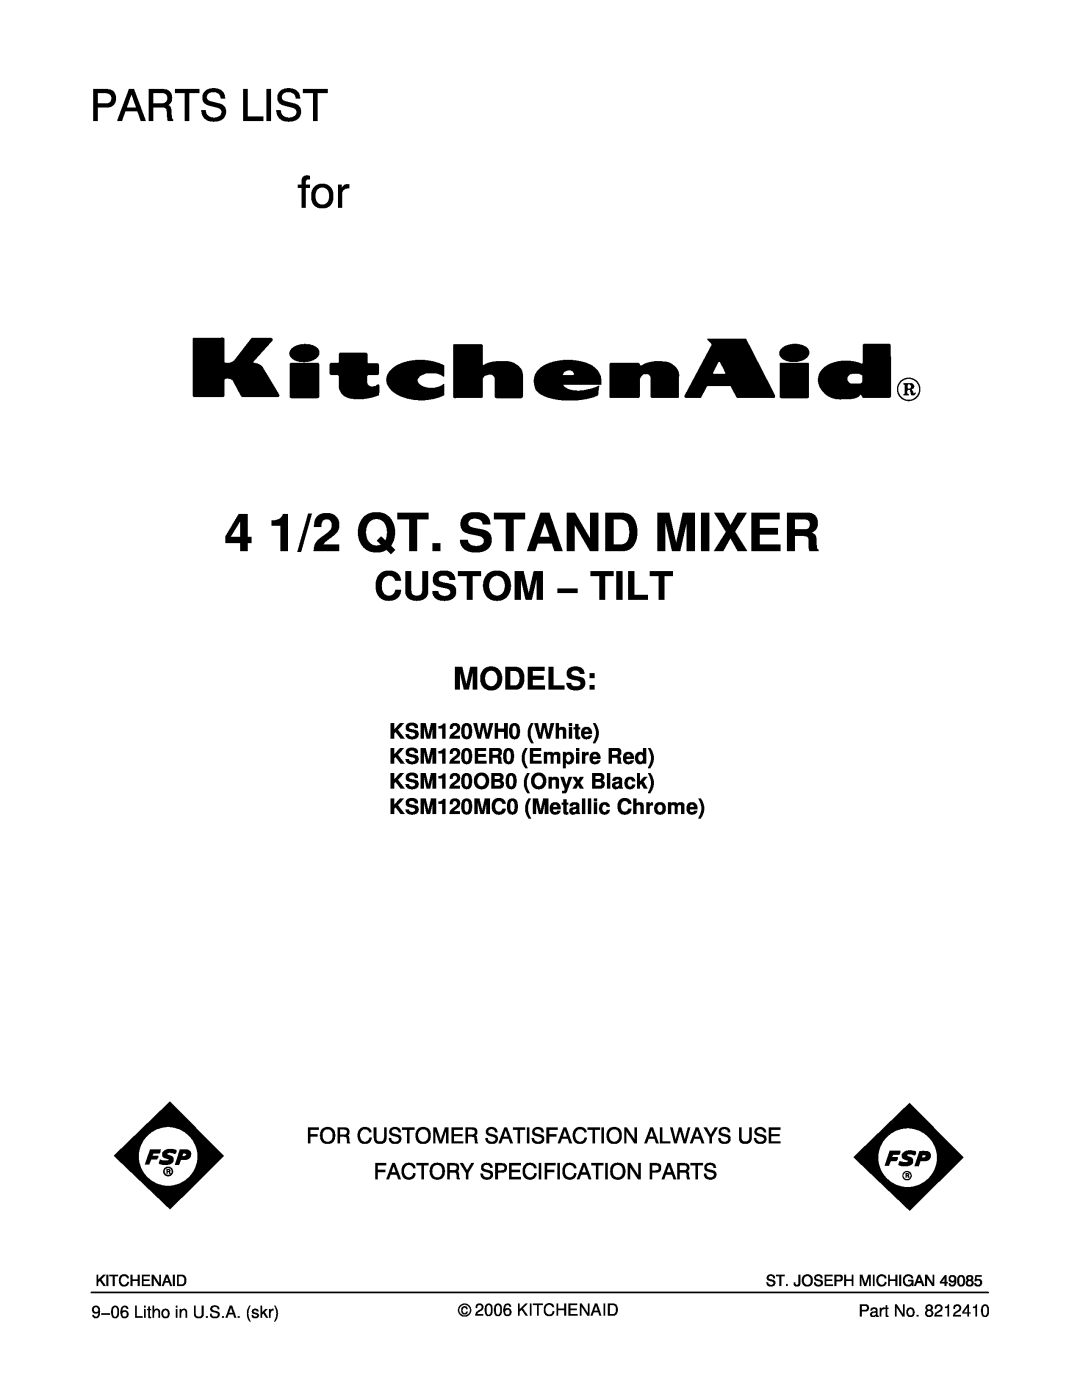 KitchenAid 8212410 manual Models, KSM120WH0 White KSM120ER0 Empire Red KSM120OB0 Onyx Black, KSM120MC0 Metallic Chrome 